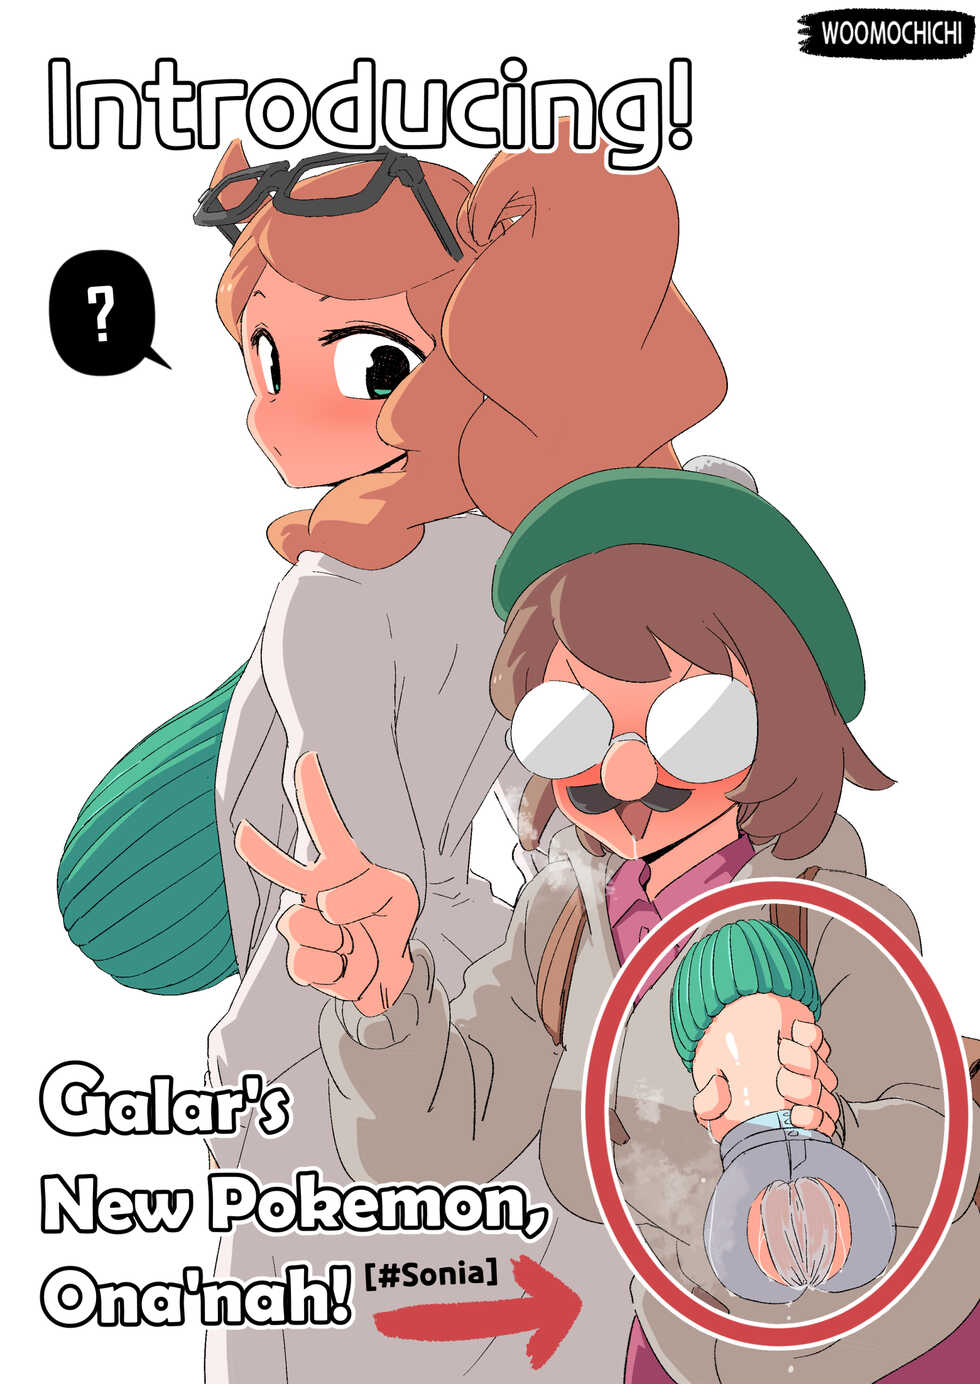 [Woomochichi] Introducing! Gallar's new Pokemon, Ona'nah! - Page 1